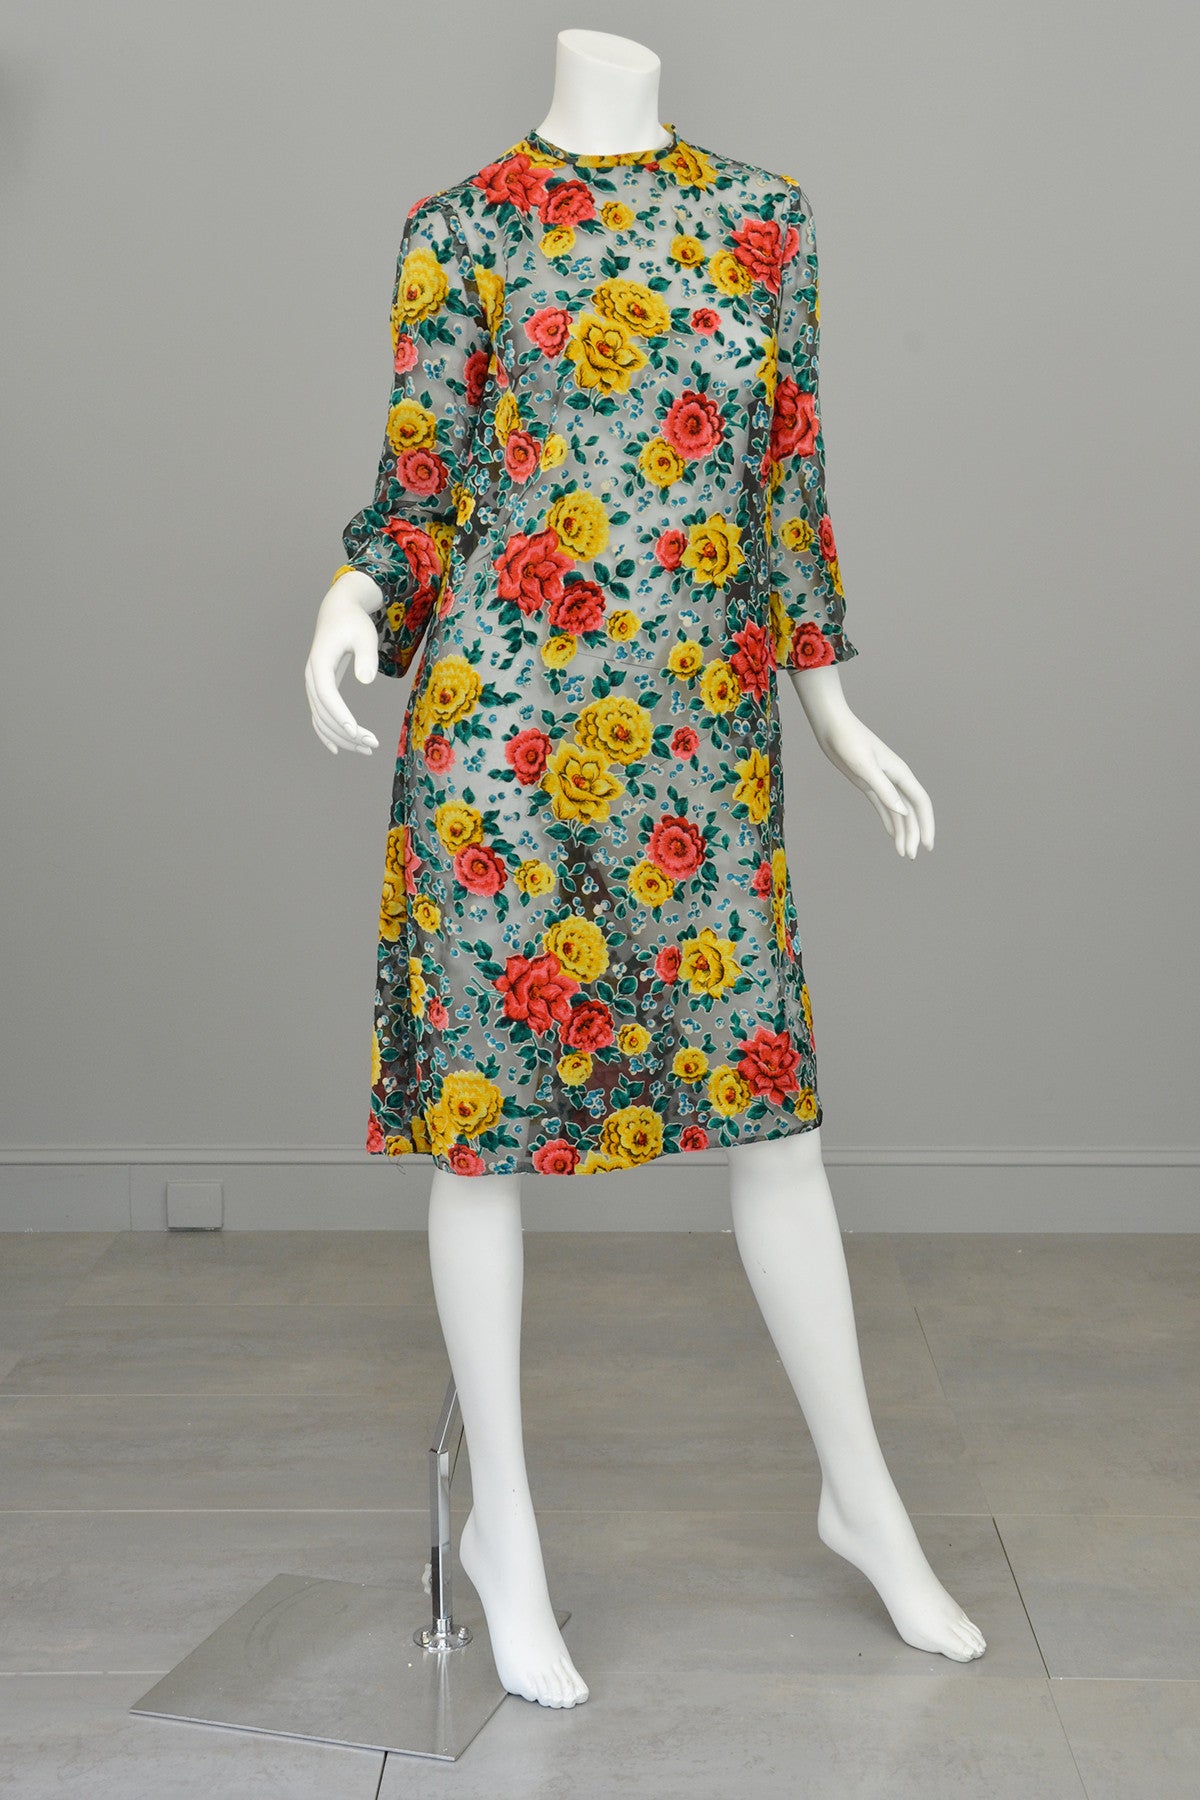 Burnout Velvet Novelty Floral Print Vintage Shift Dress Cut Velvet Dress